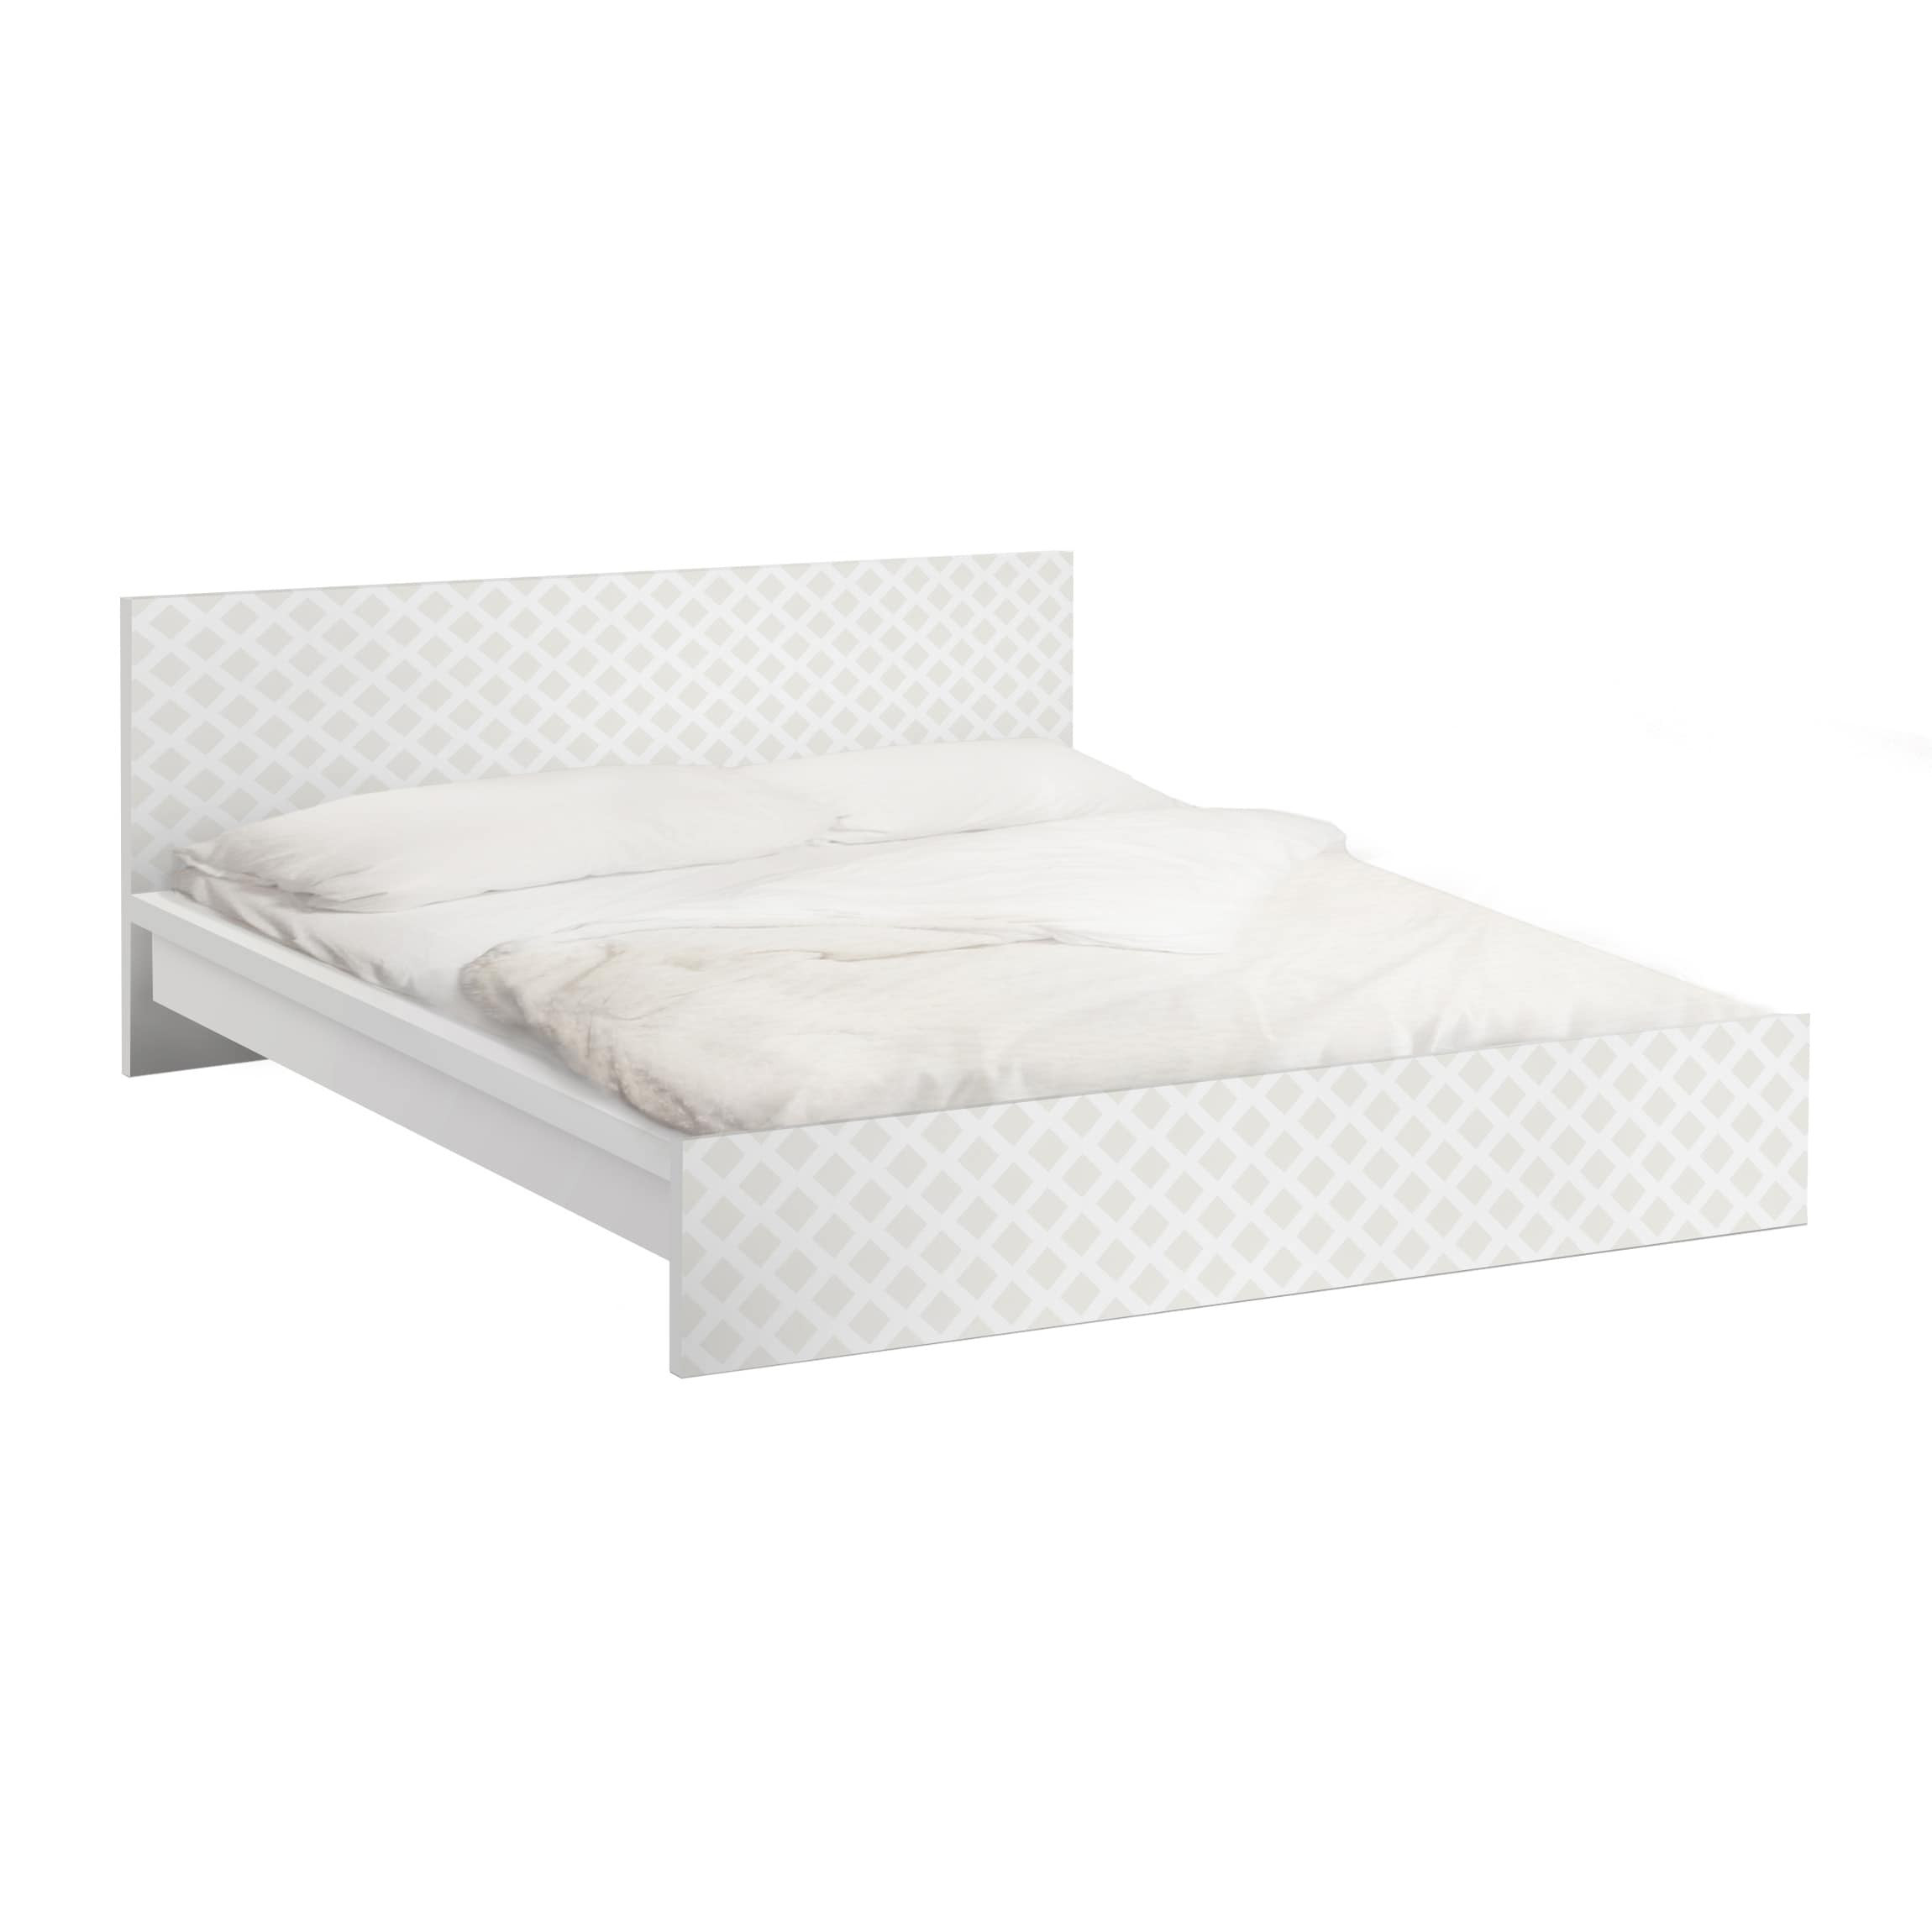 Ikea Malm Bett
 Möbelfolie für IKEA Malm Bett niedrig 140x200cm